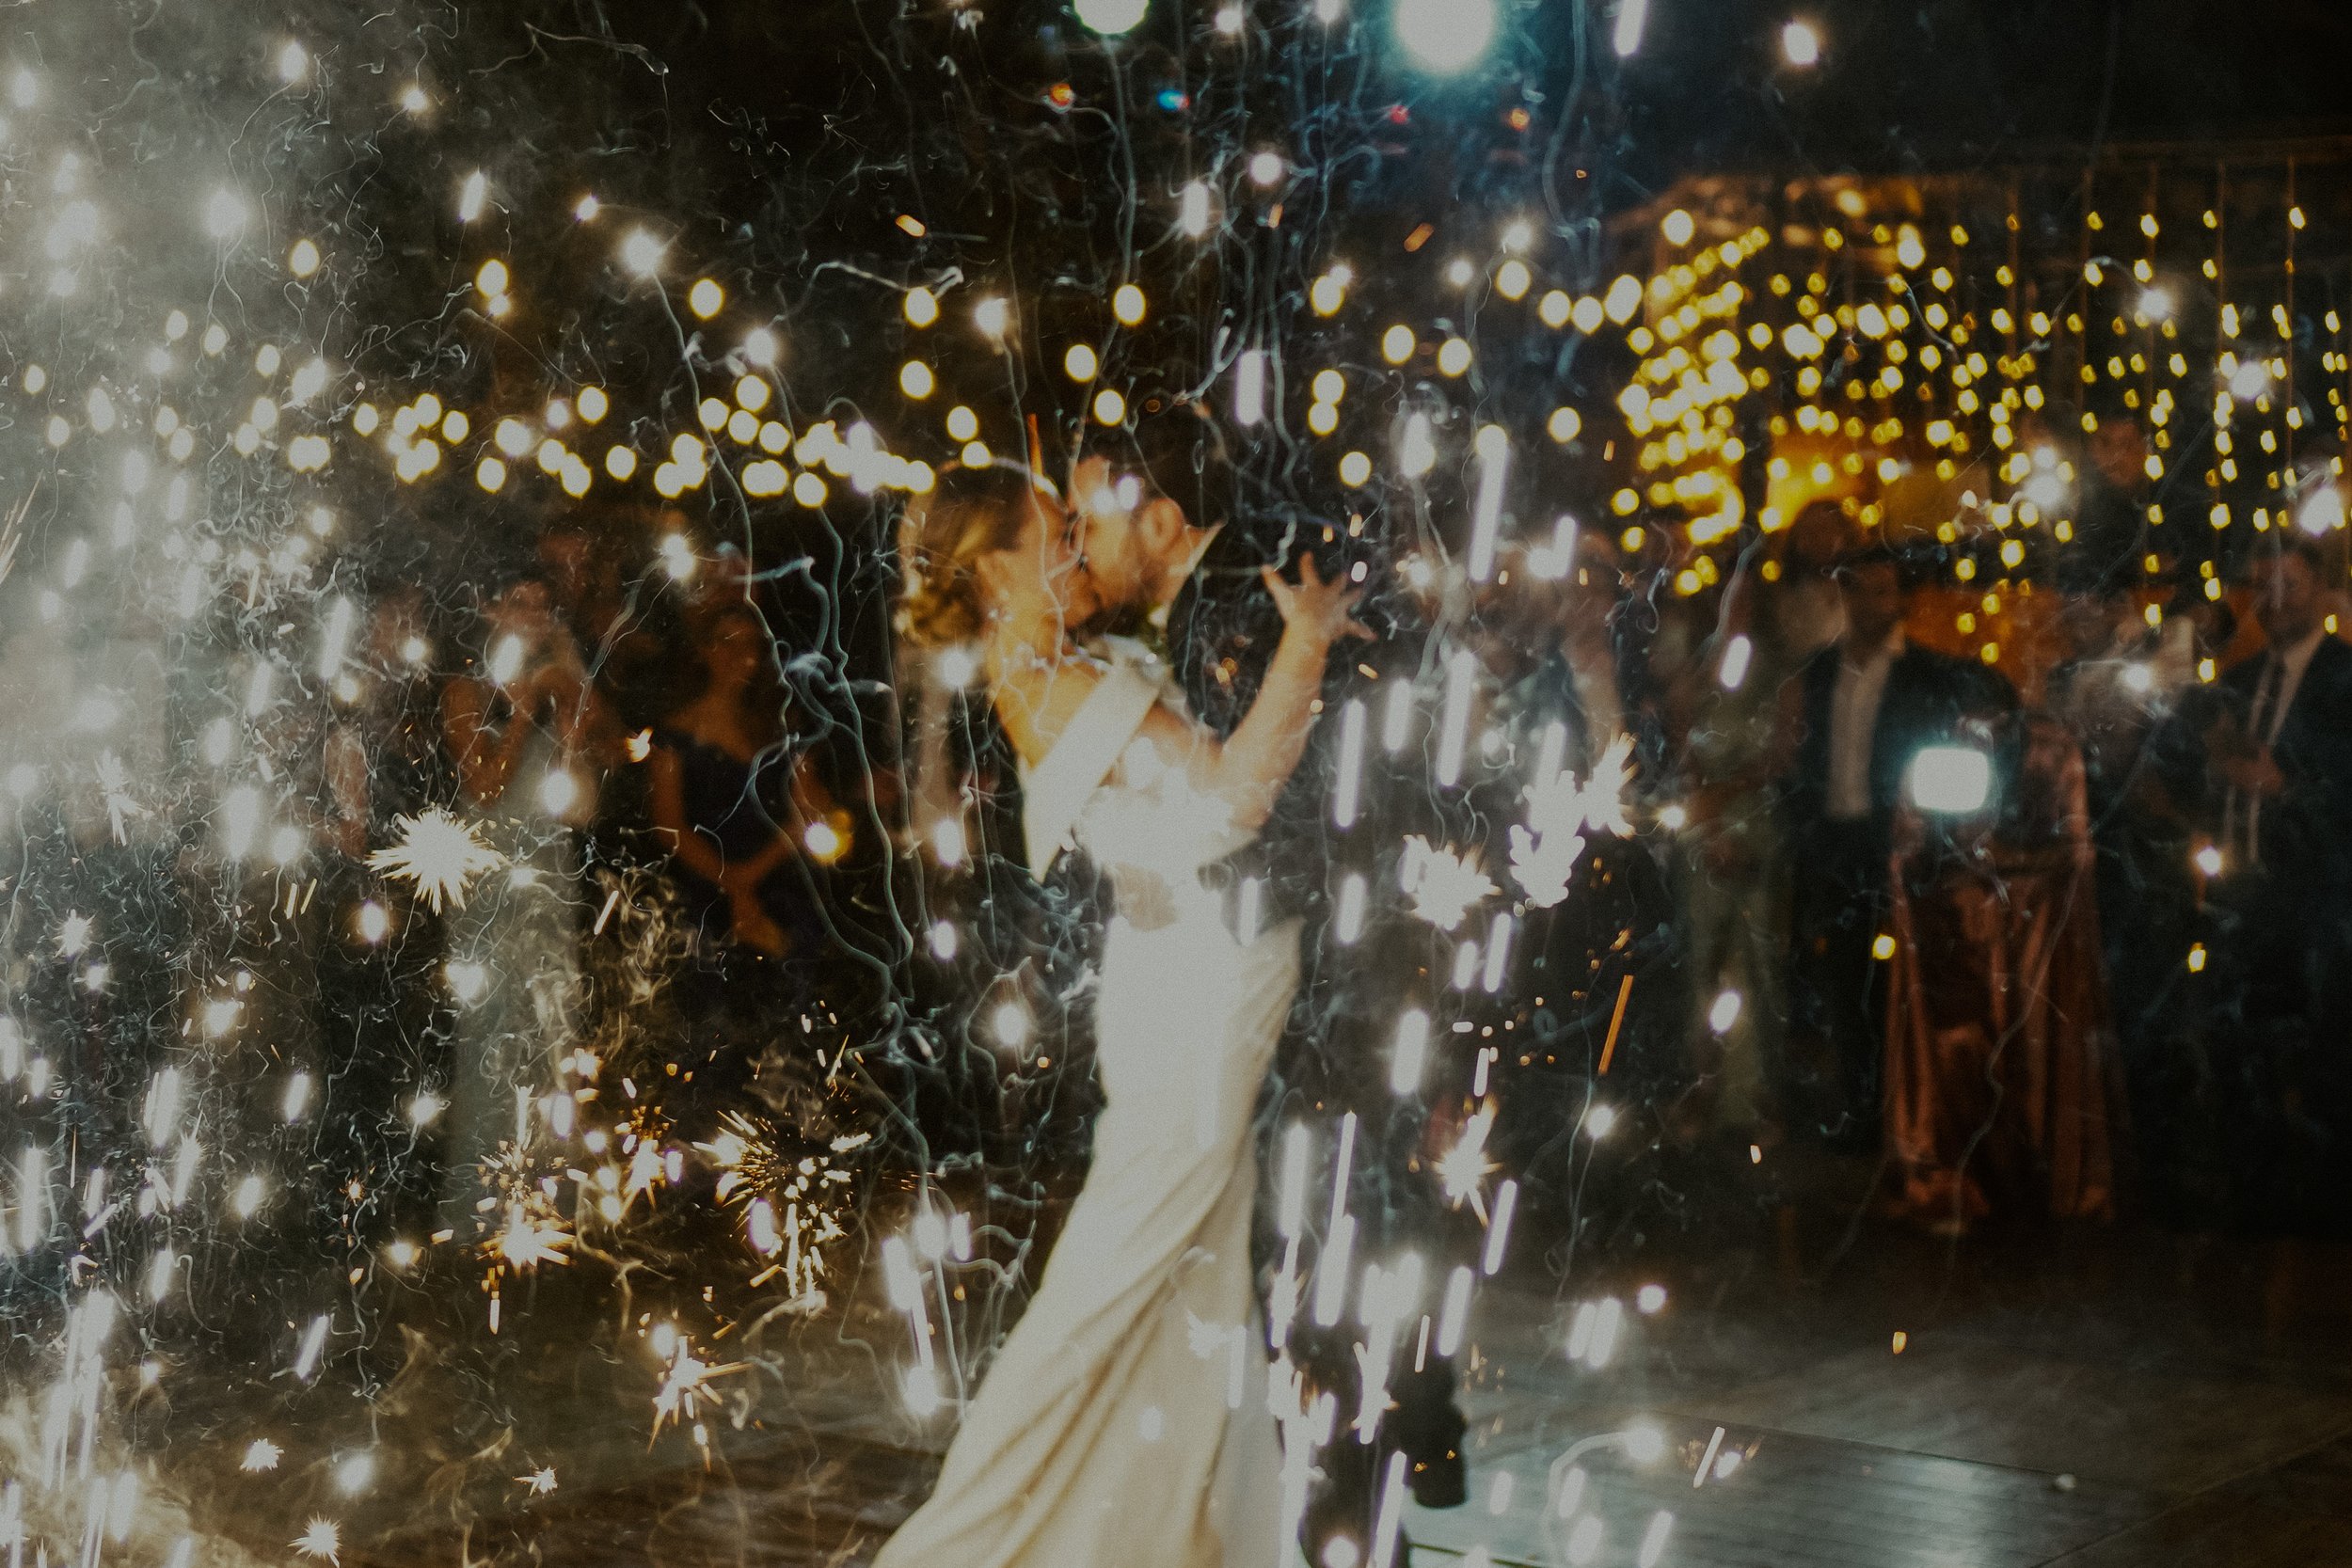 dramatic sparkler exit in this destination wedding